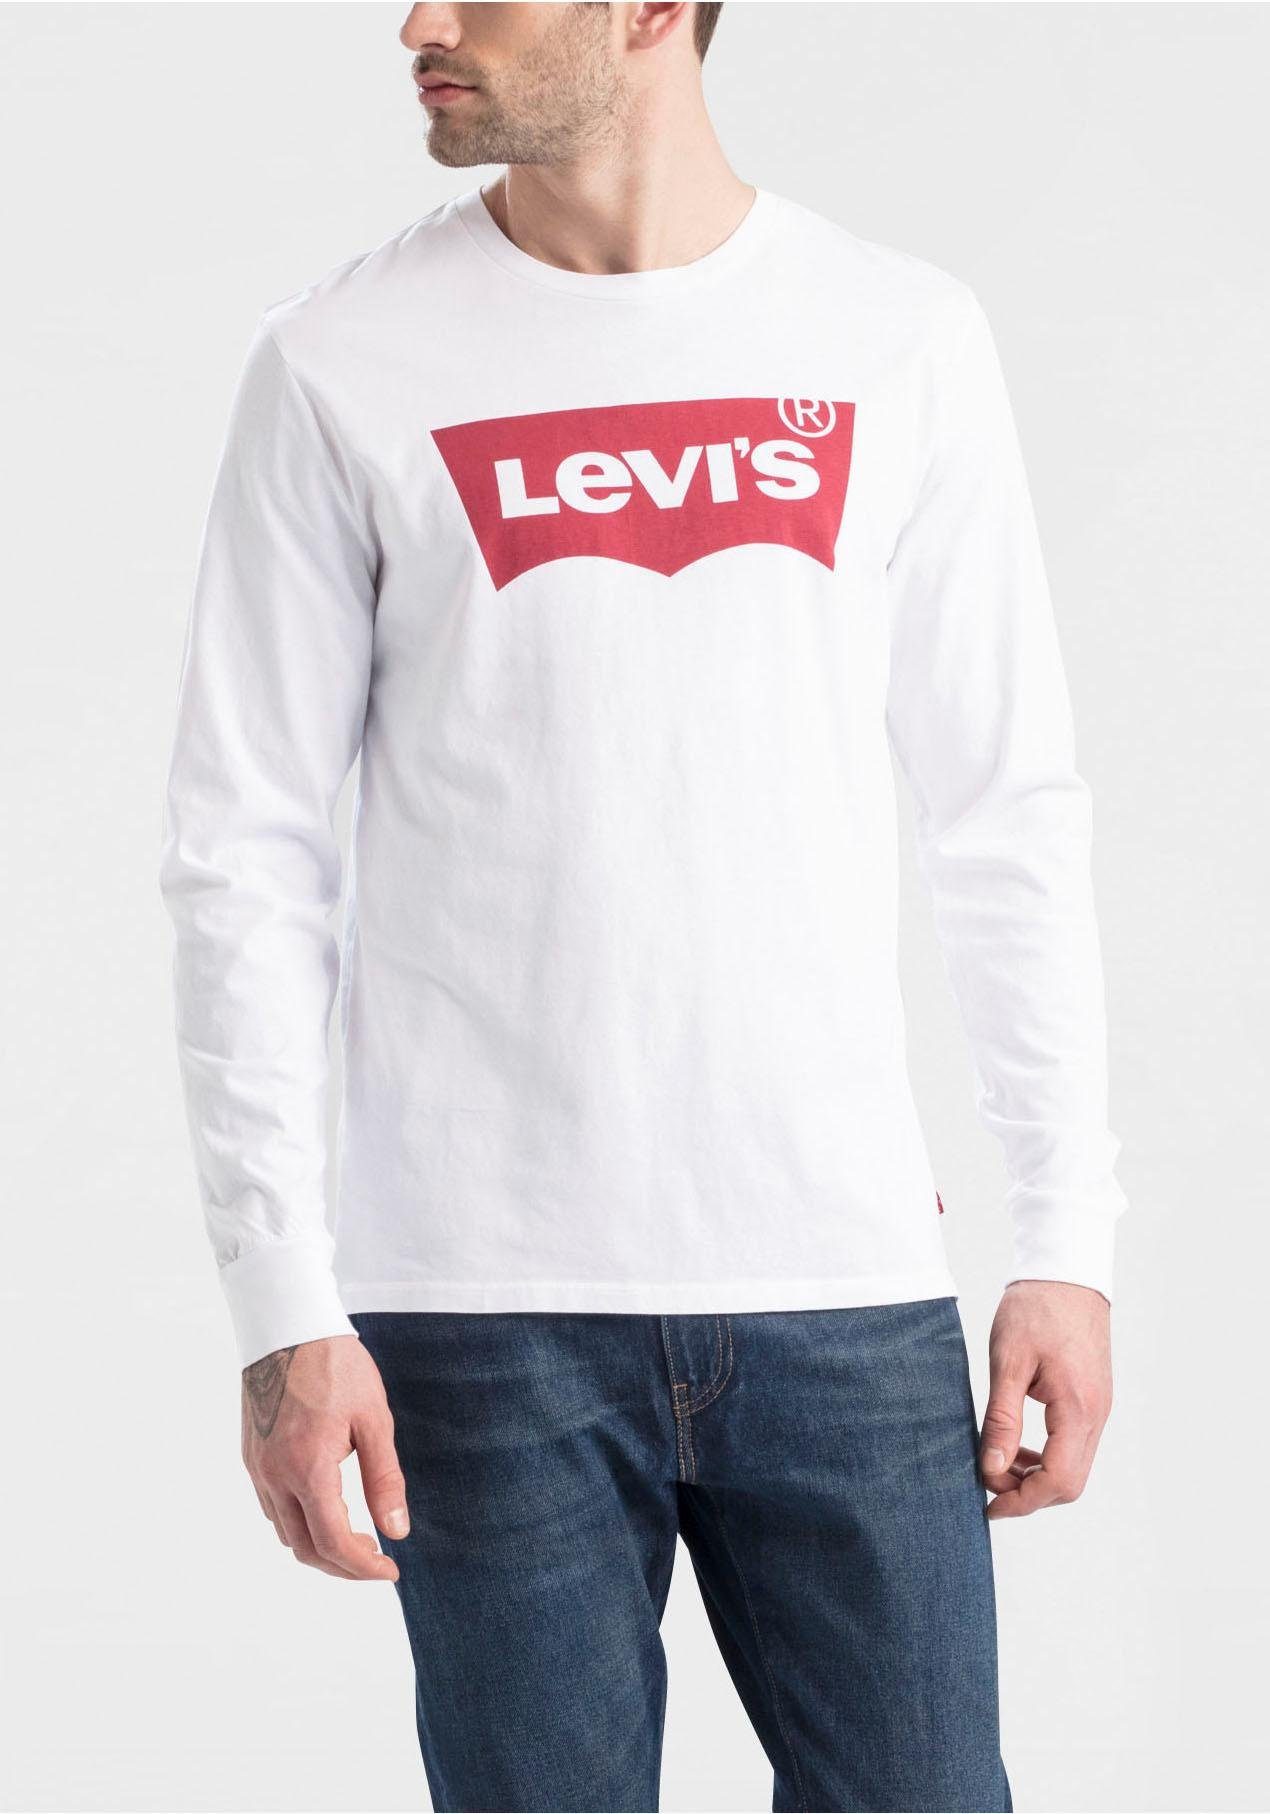 Langarmshirt Logo-Print Levi's® weiß mit